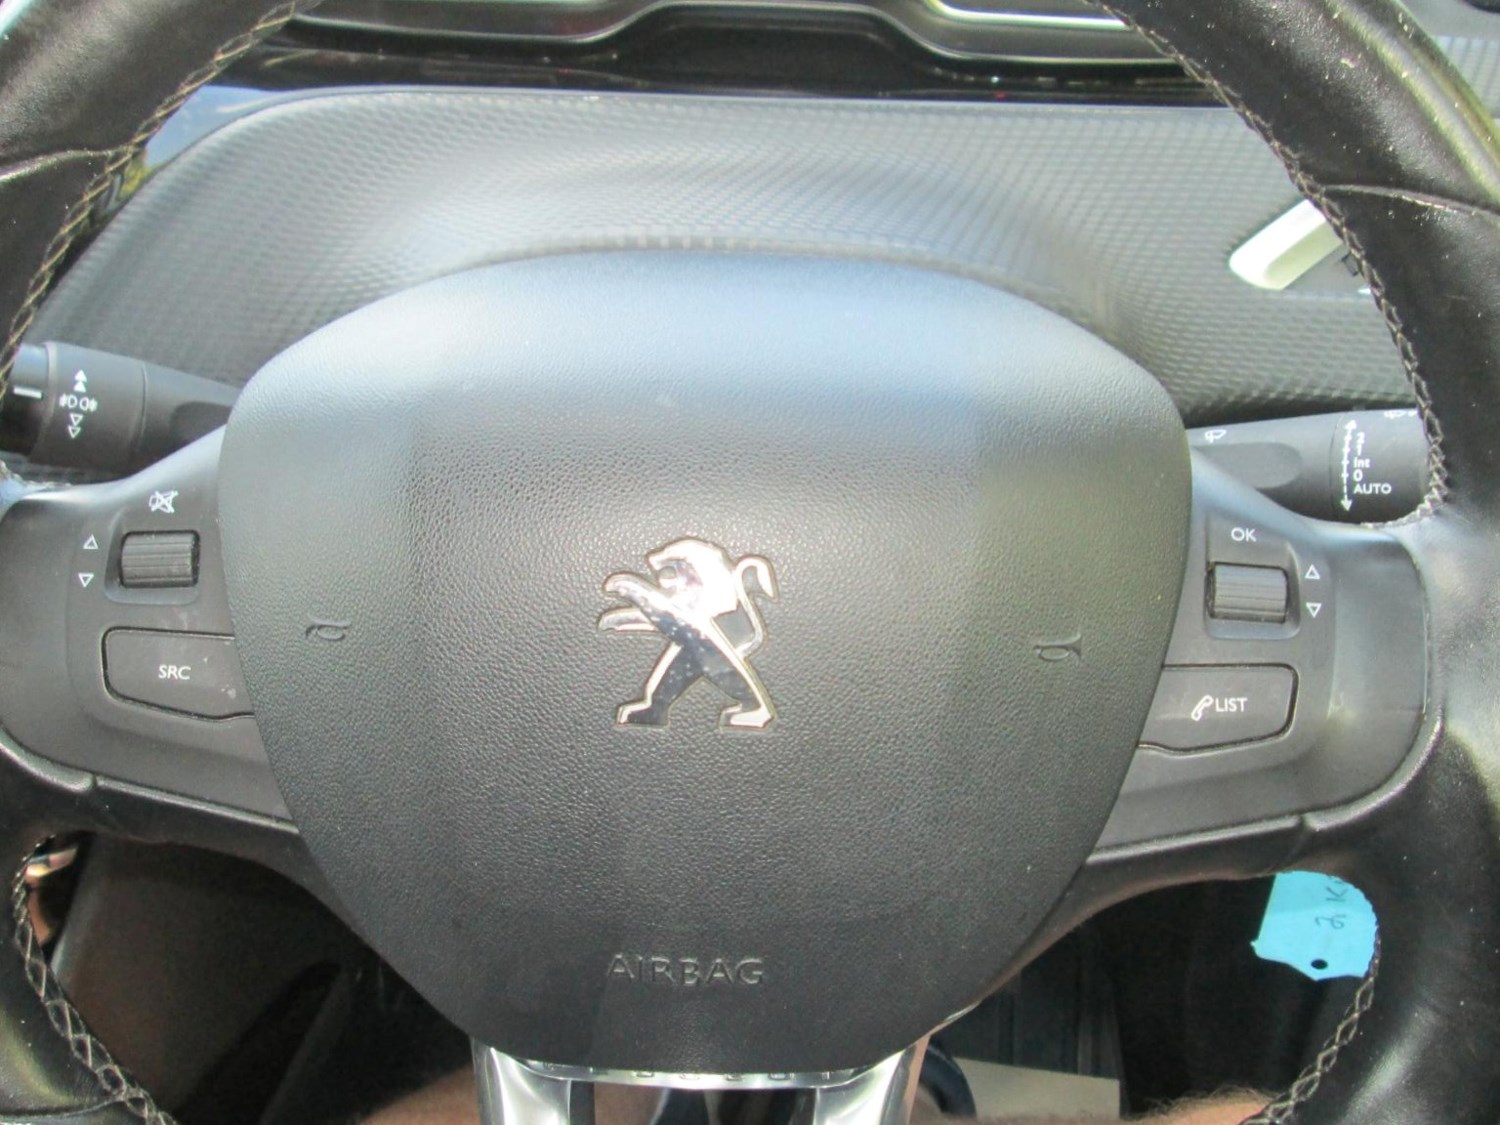 Peugeot 2008 Listing Image